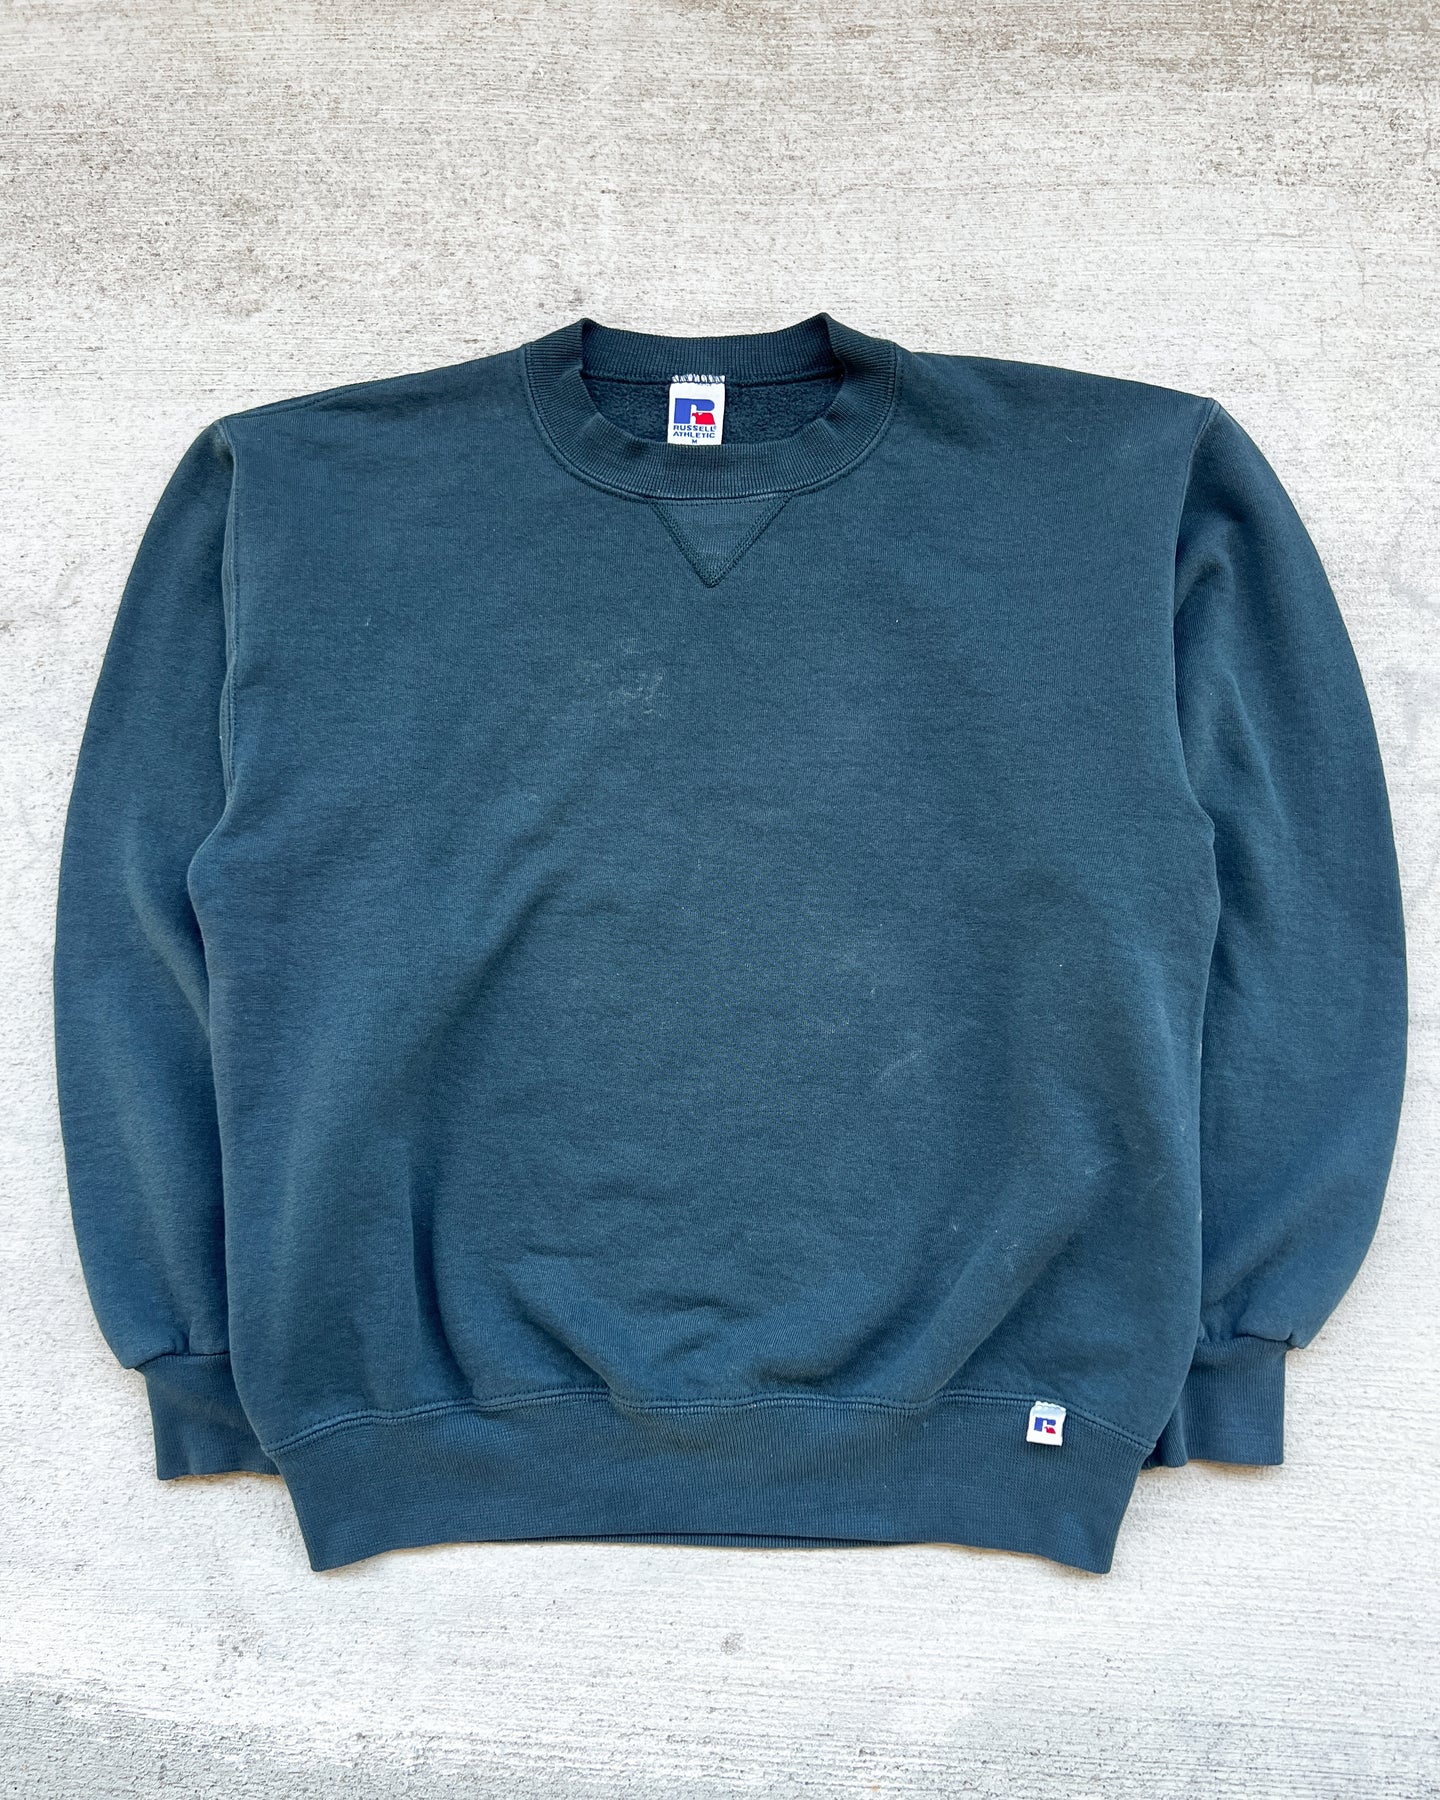 1990s Russell Athletic Sea Green Crewneck Sweatshirt - Size Medium